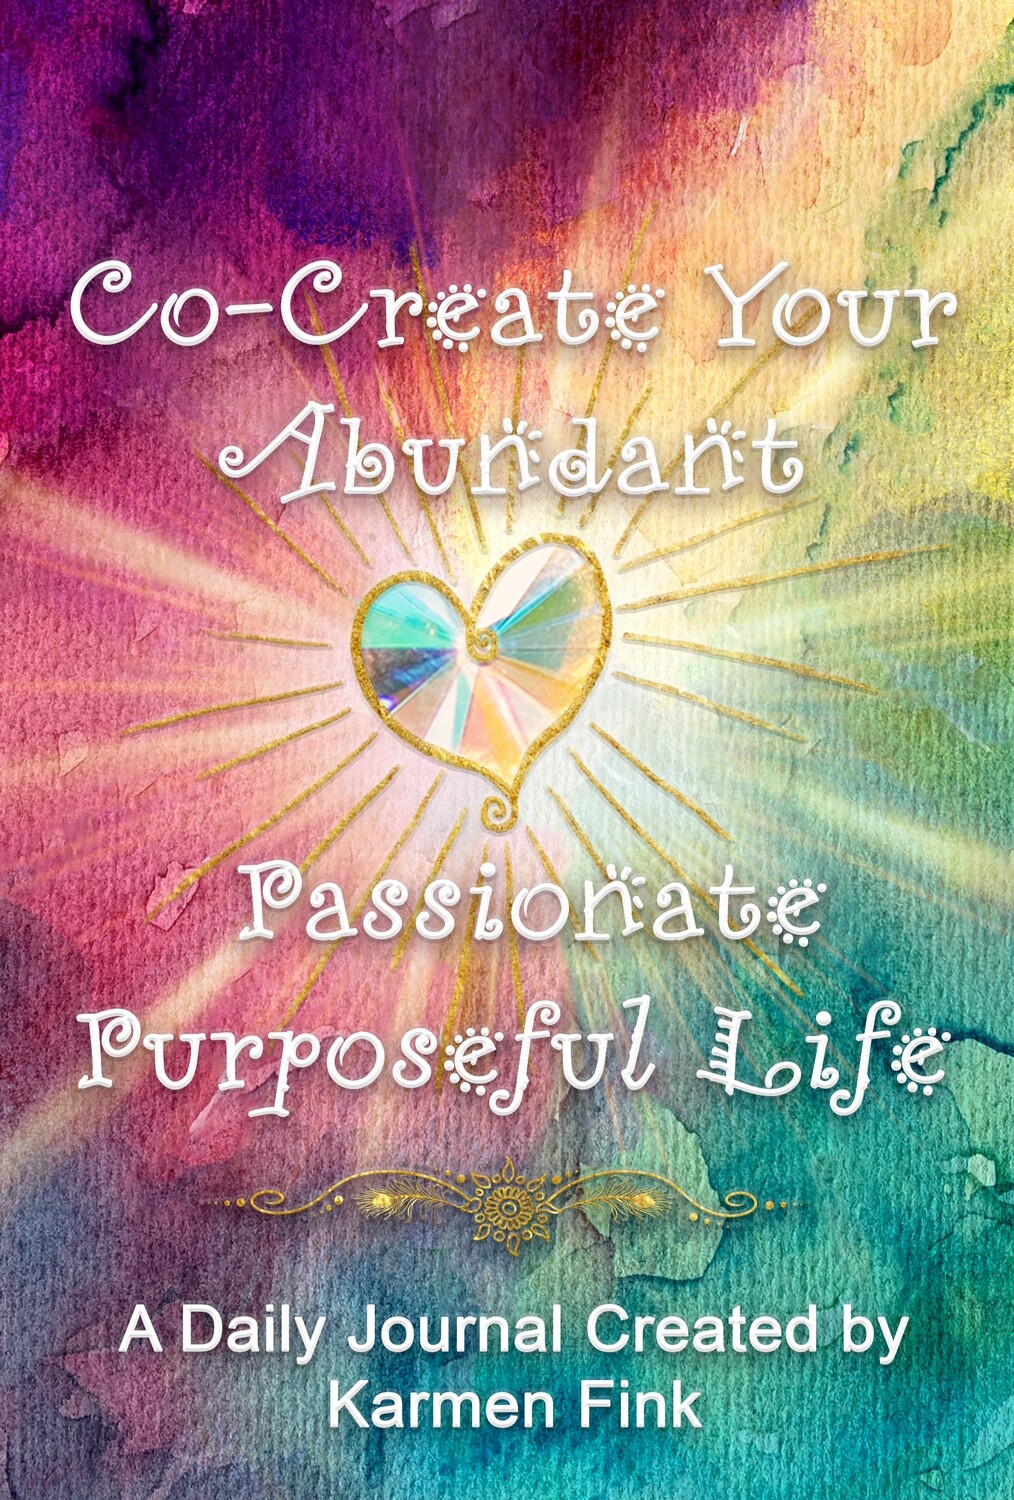 Creating a life you Love! Masterclass